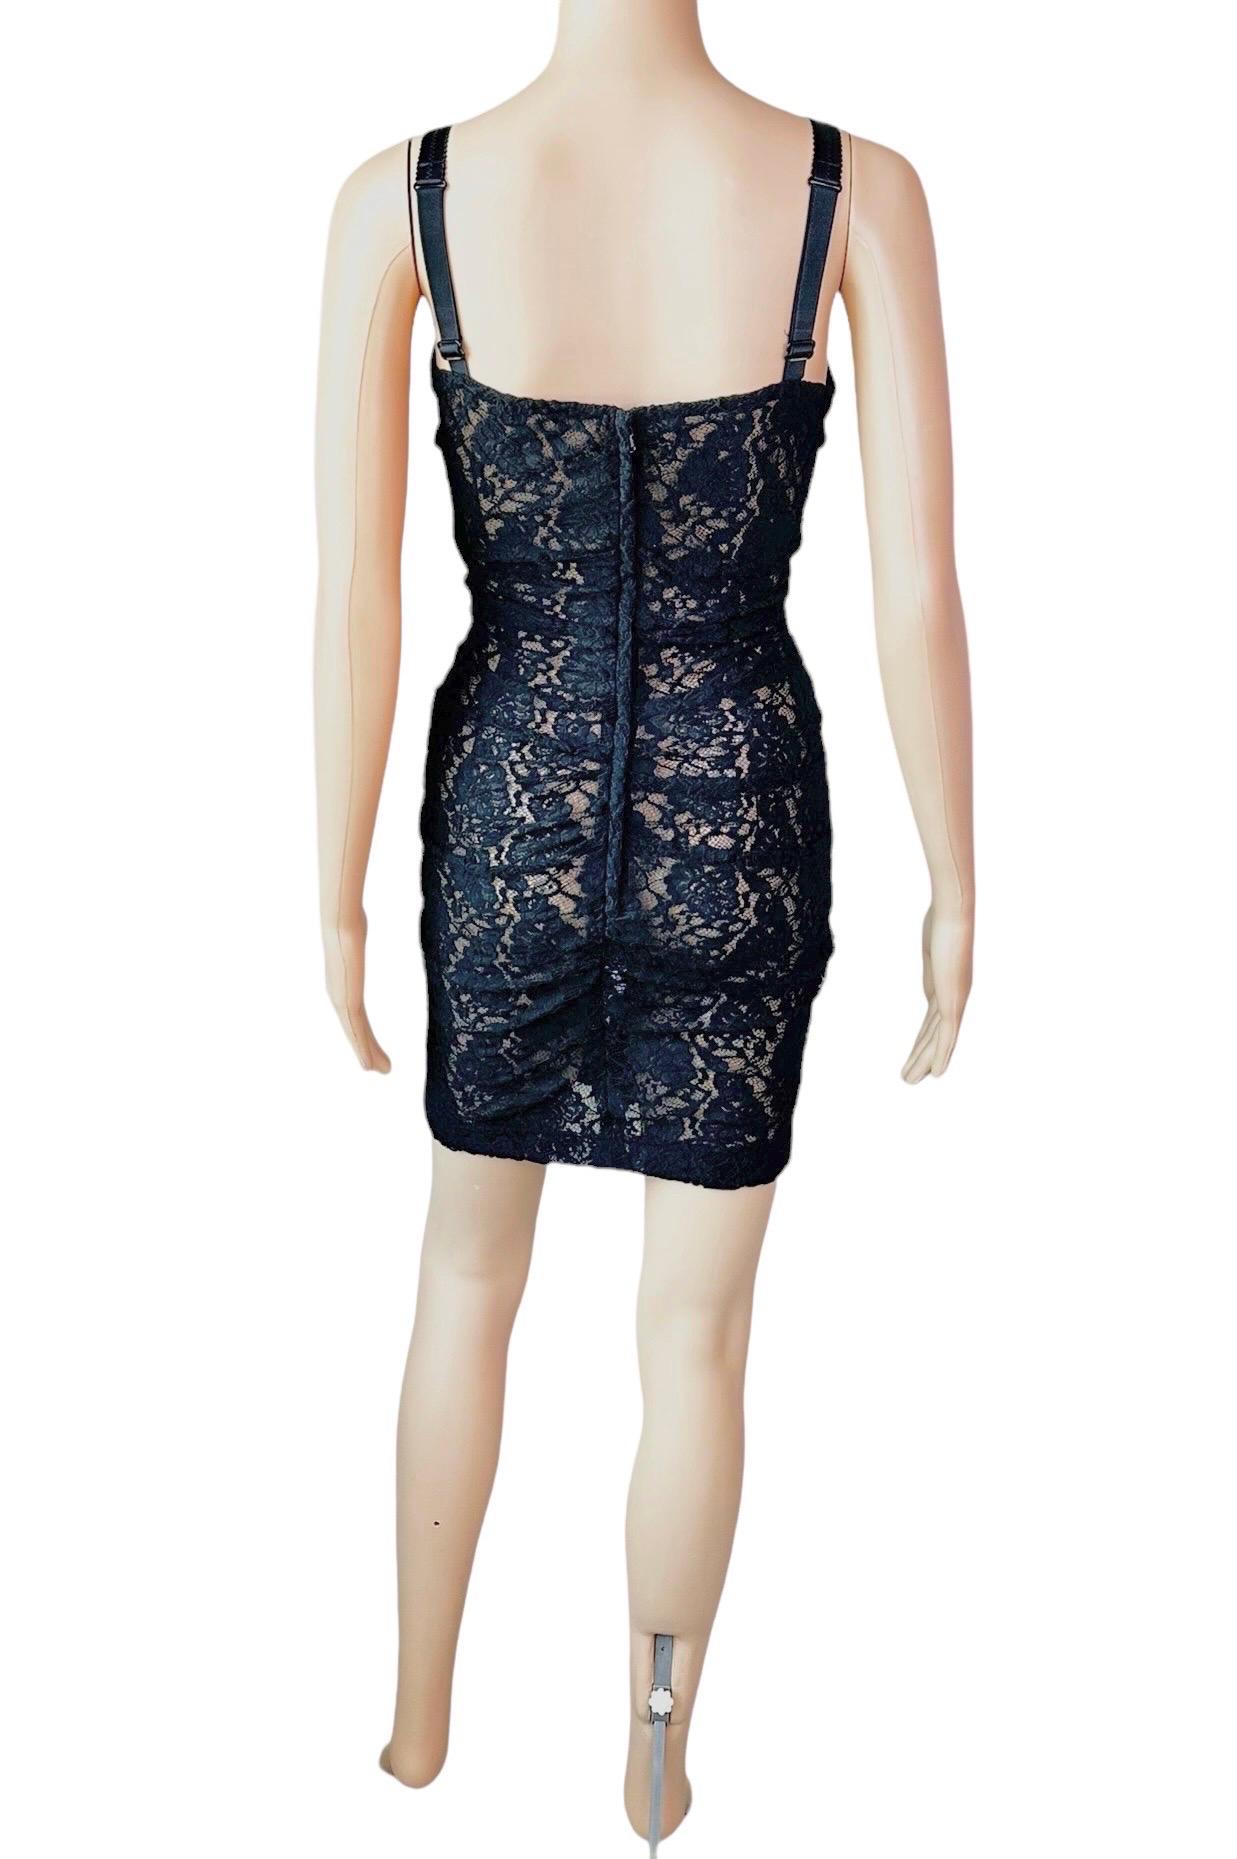 Dolce & Gabbana Lace Up Bustier Sheer Lace Crochet Bodycon Black Mini Dress For Sale 3